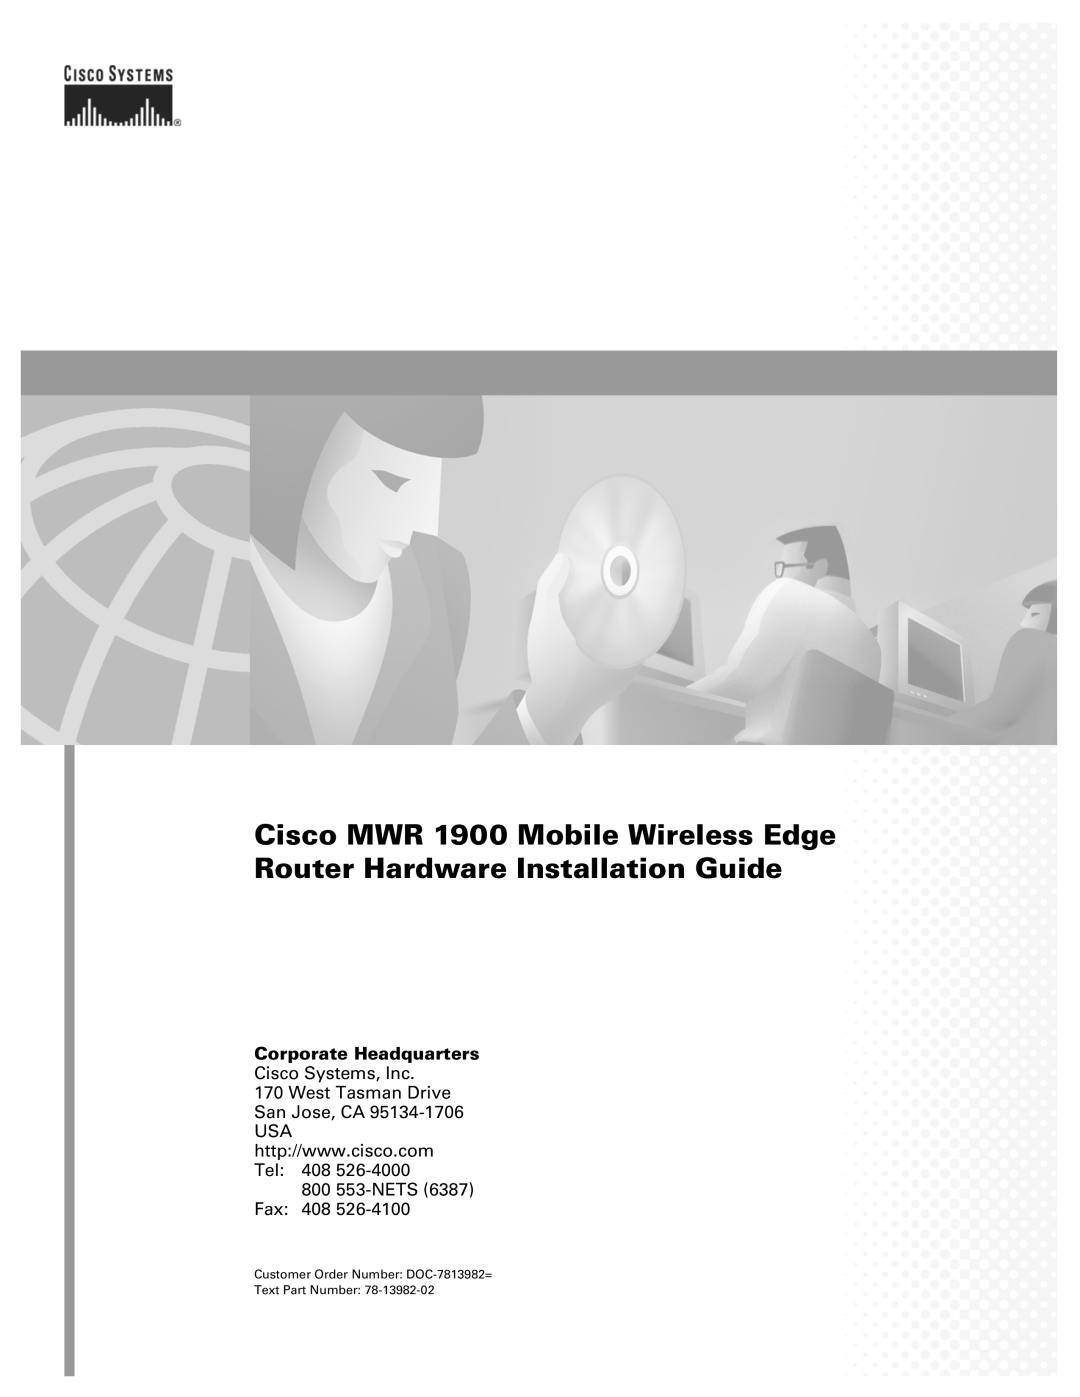 Cisco Systems MWR 1900 manual Corporate Headquarters, Cisco Systems, Inc 170 West Tasman Drive San Jose, CA 